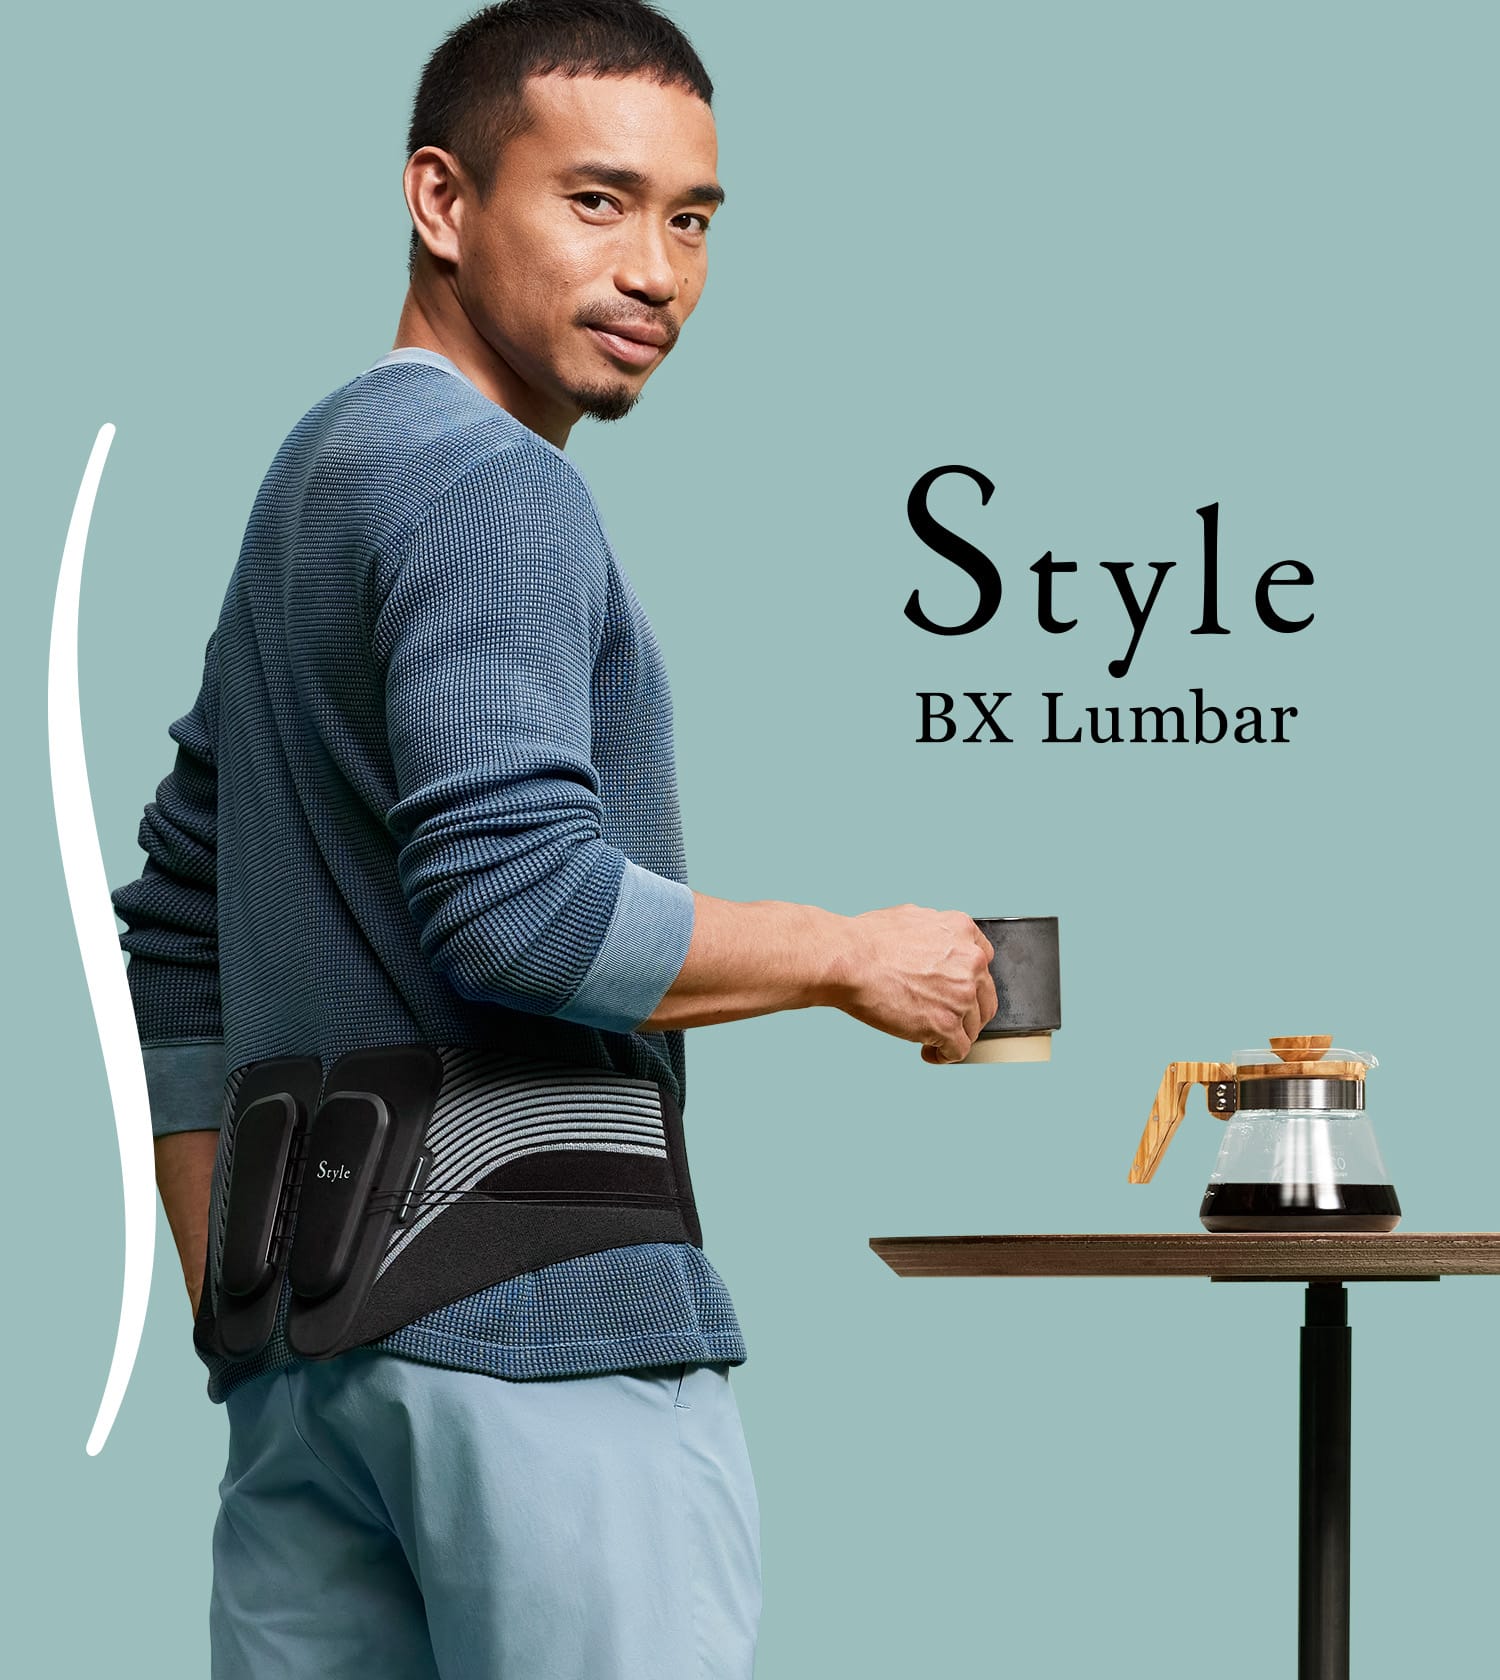 Style BX Lumbar TVCM放映中